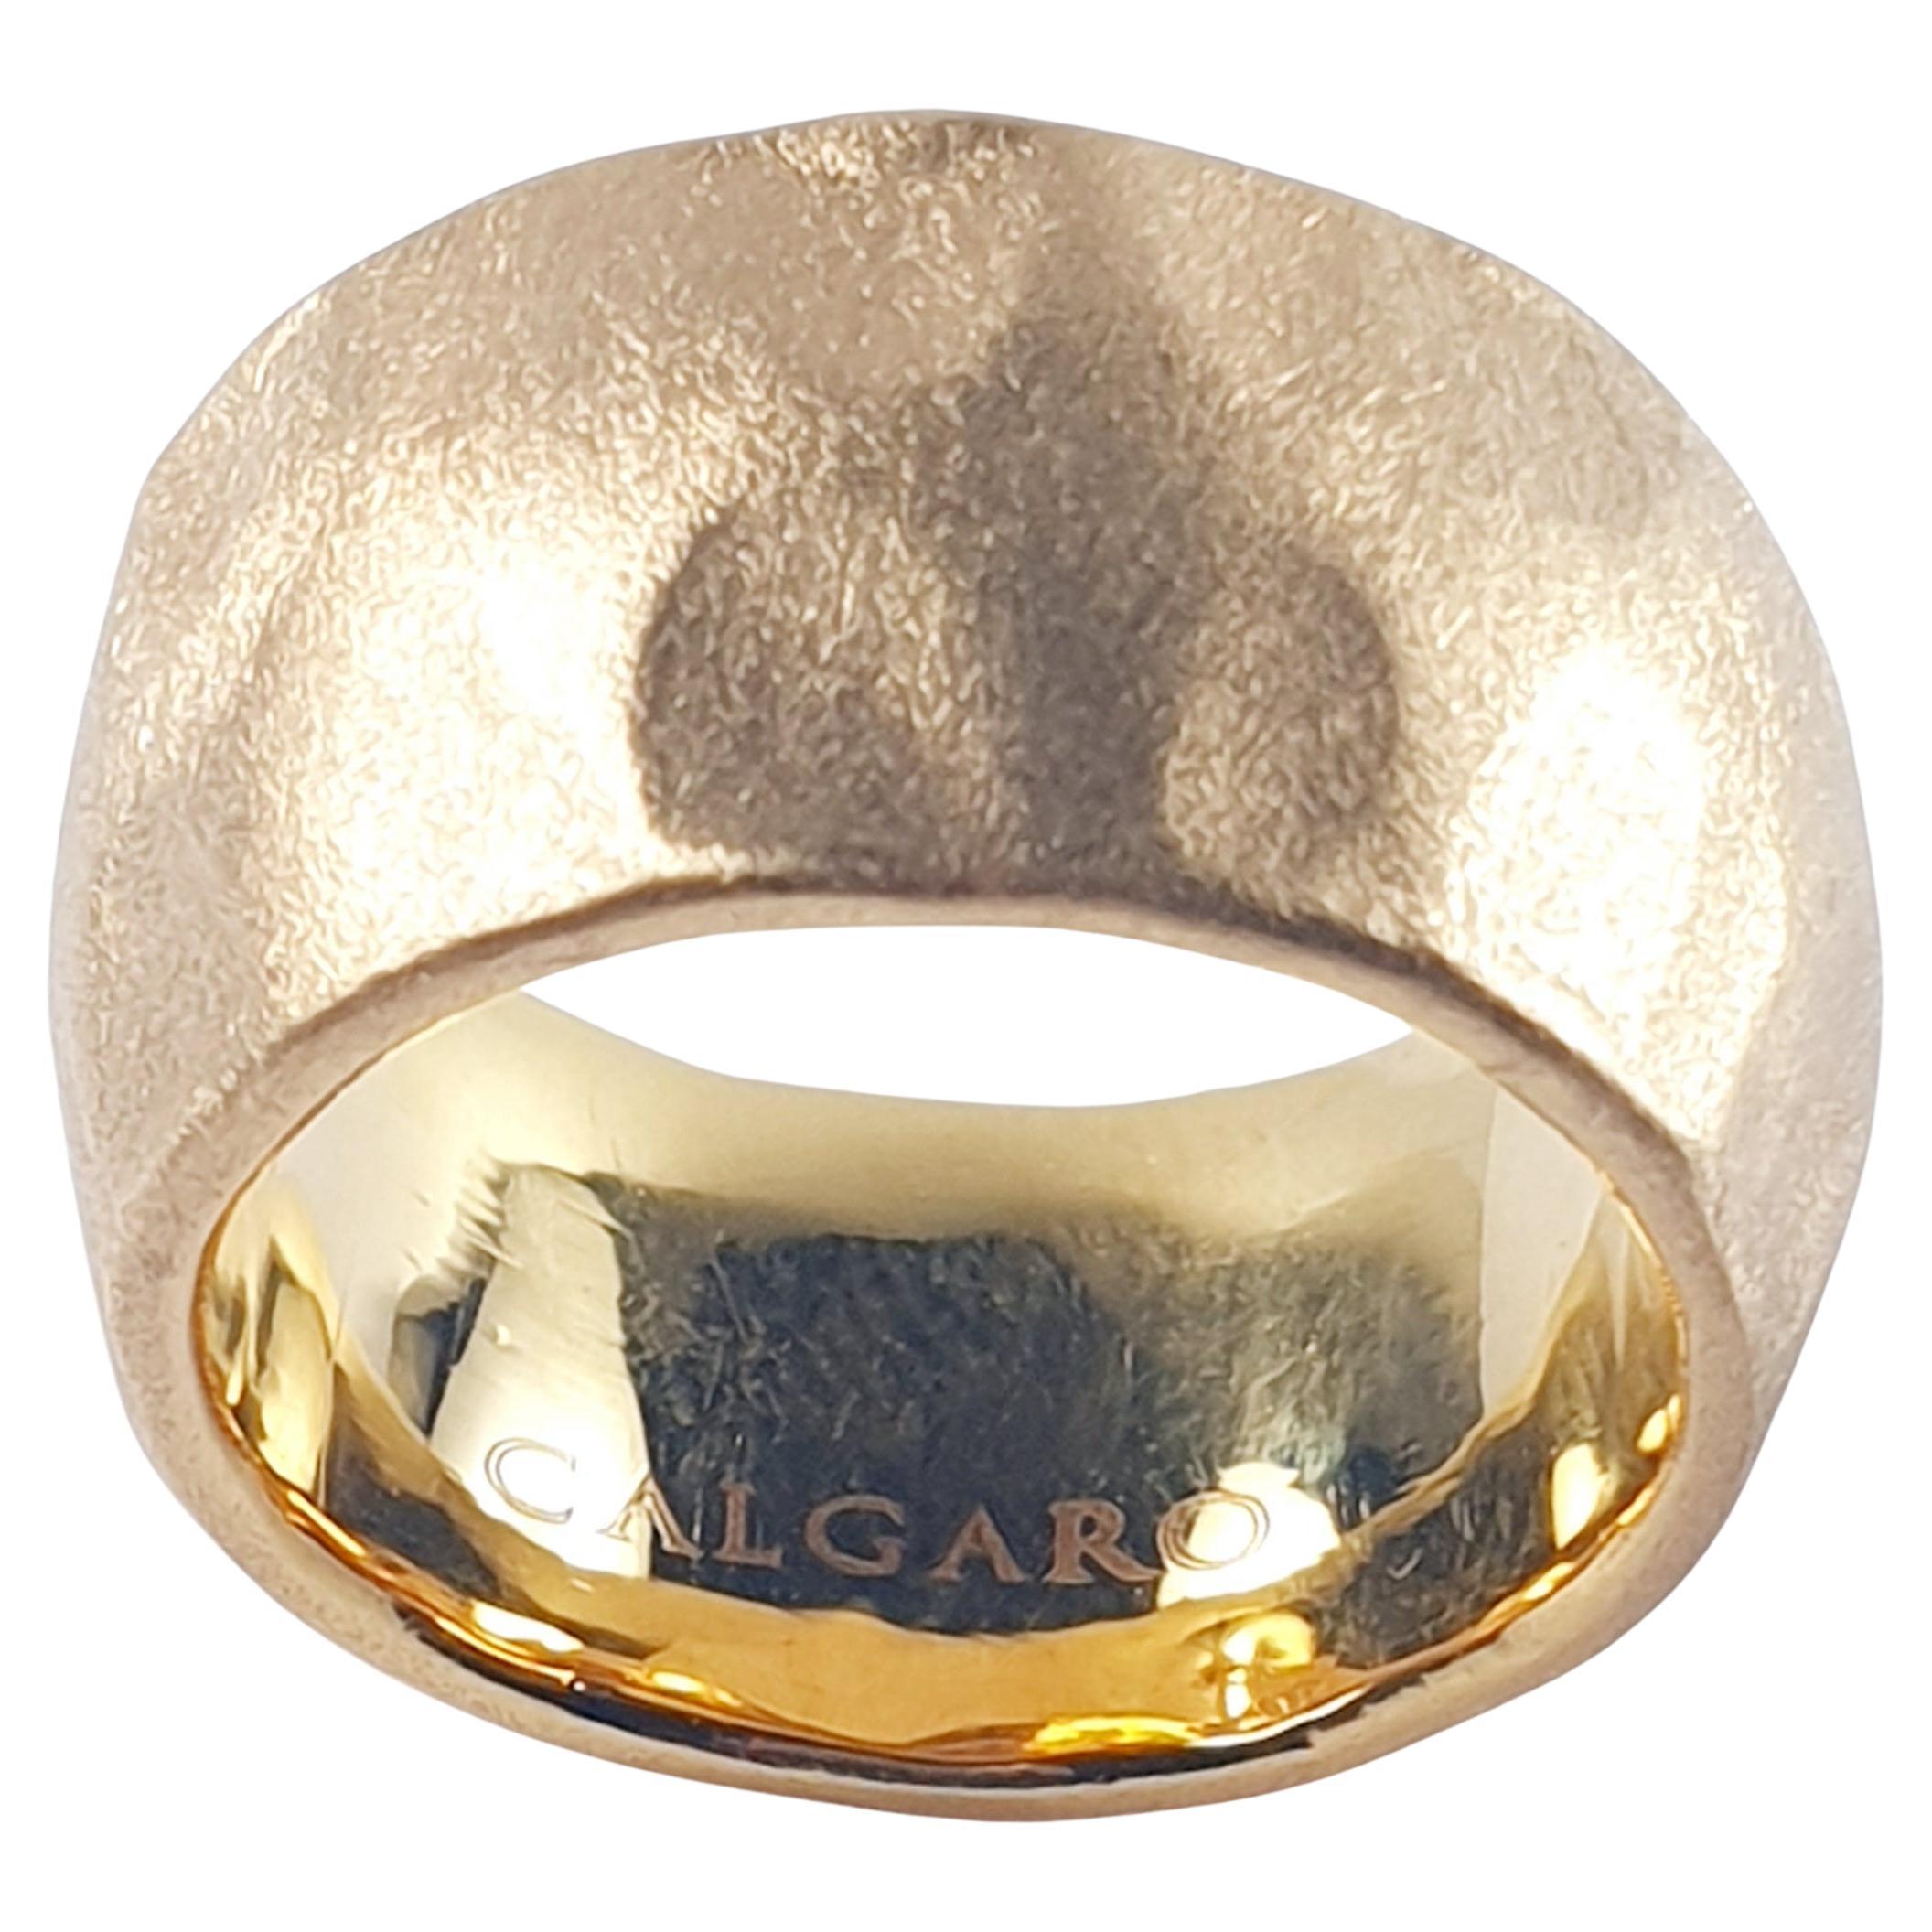 Calgaro 18 Karat Satinierter Roségold Ring mit Martel Textur im Angebot